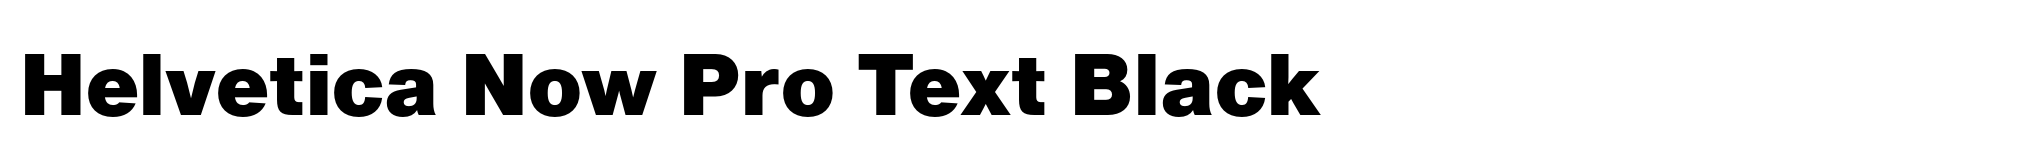 Helvetica Now Pro Text Black image